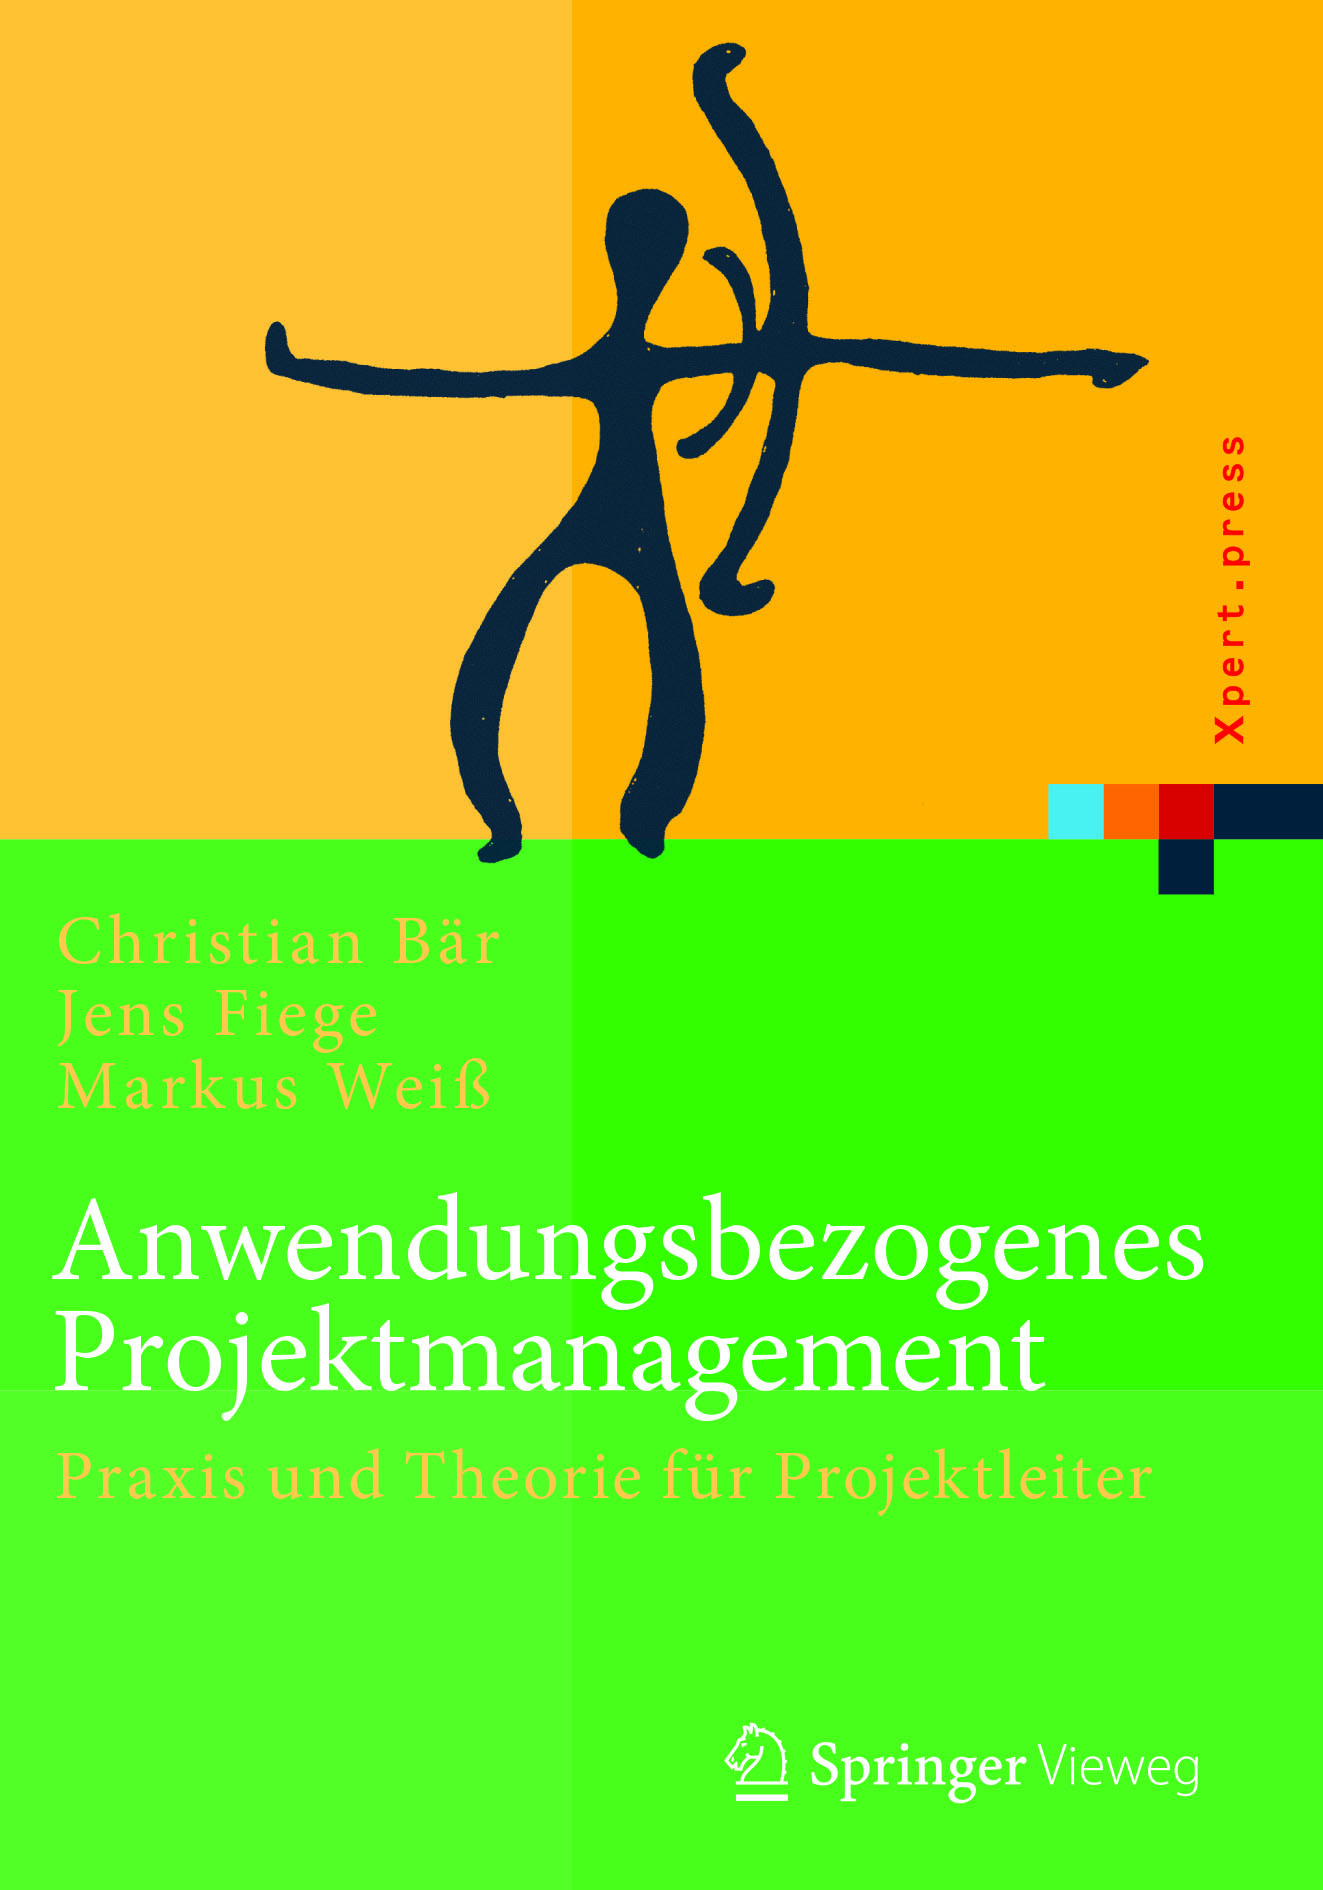 Bär, Christian - Anwendungsbezogenes Projektmanagement, ebook